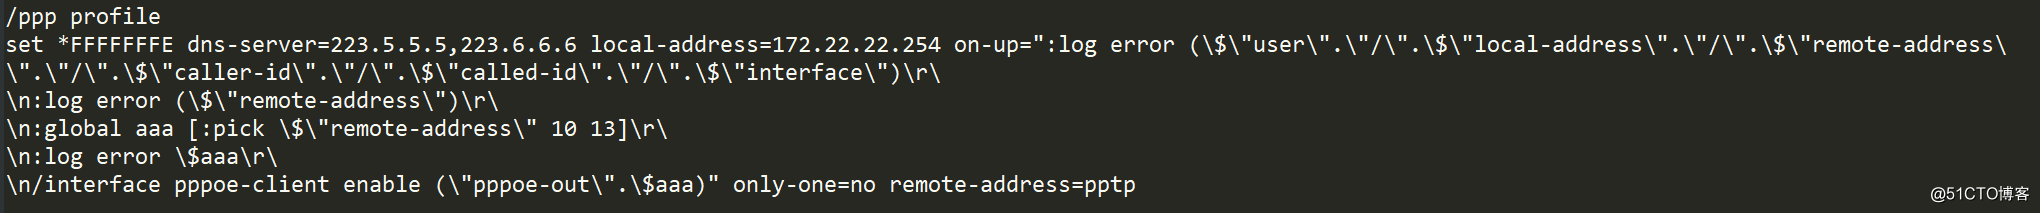 ROSは、複数のPPPOEエクスポートを使用してPPTP + L2TPサーバーを構築します